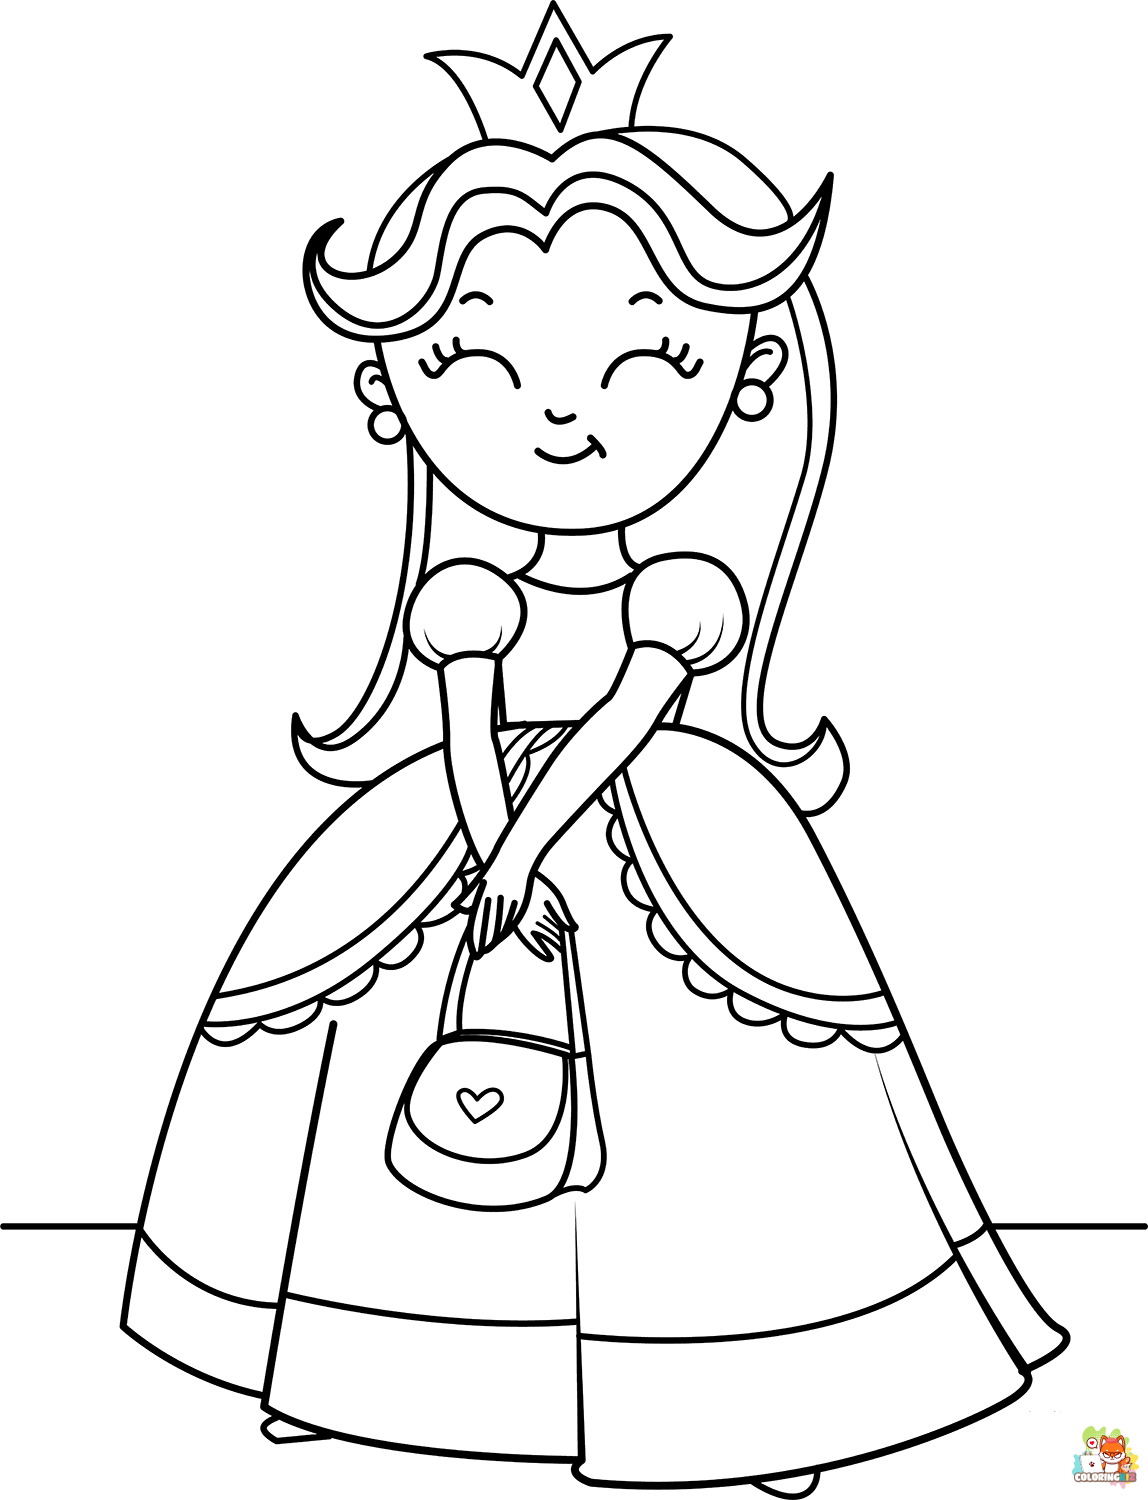 Enjoy Free Princess Coloring Pages from ColoringKiz